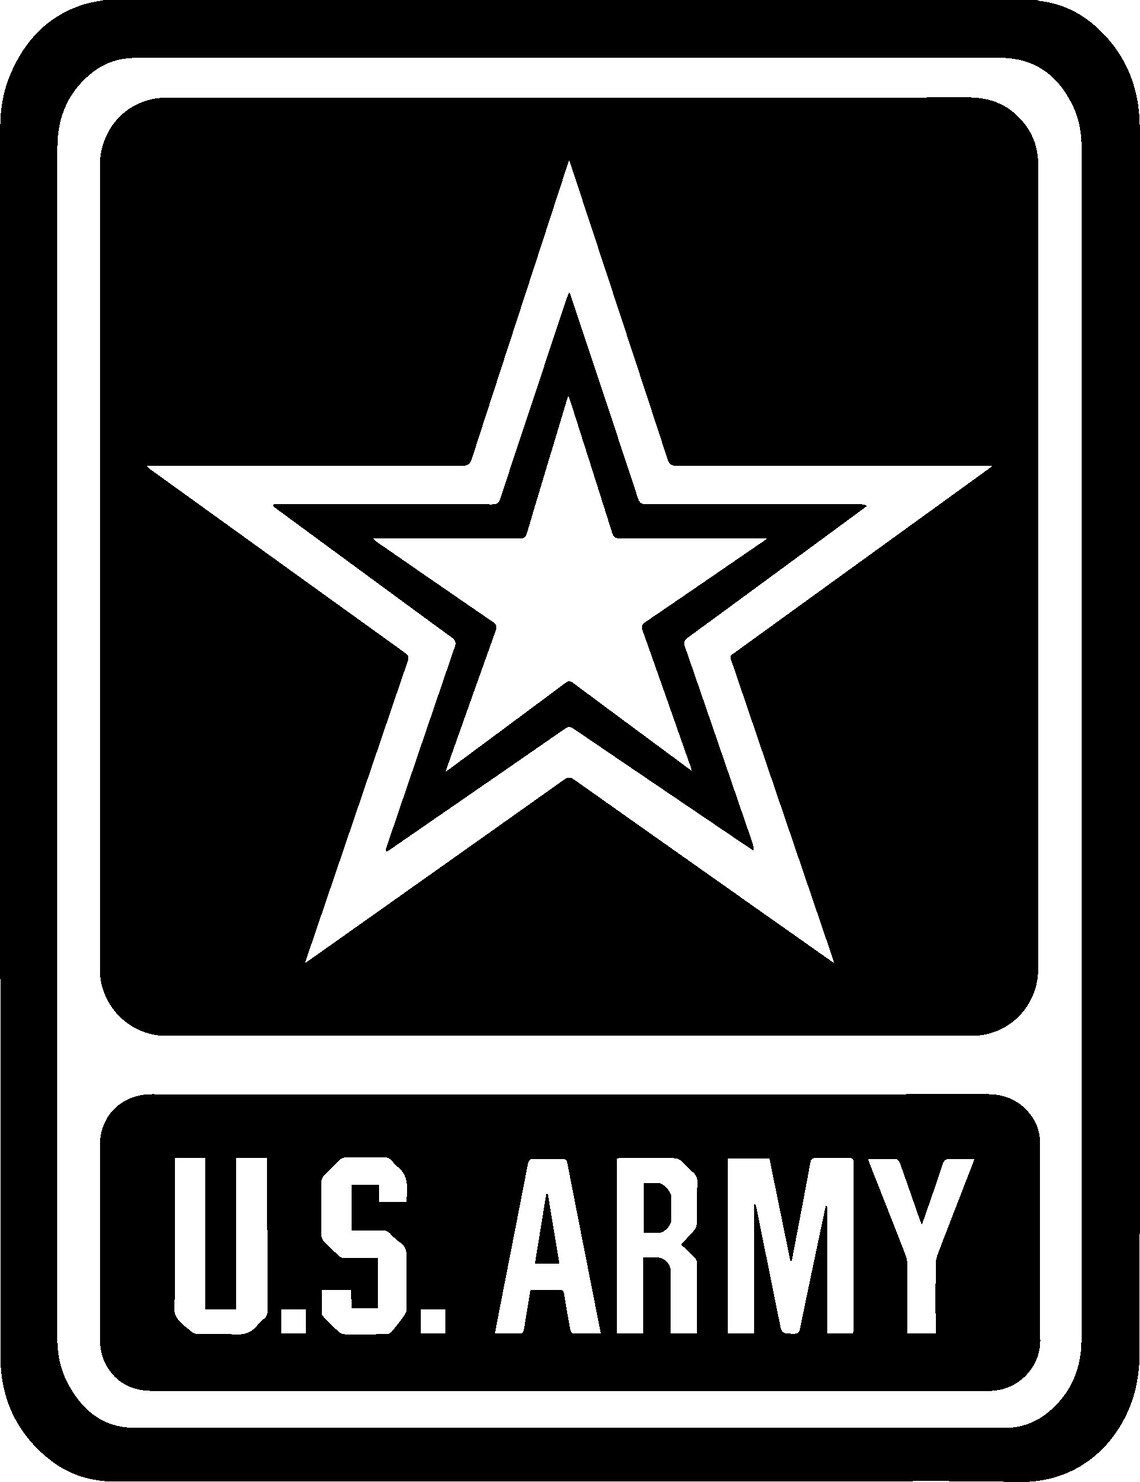 U.S. Army Emblem SVG Military Logo Cut File DXF PNG - Etsy